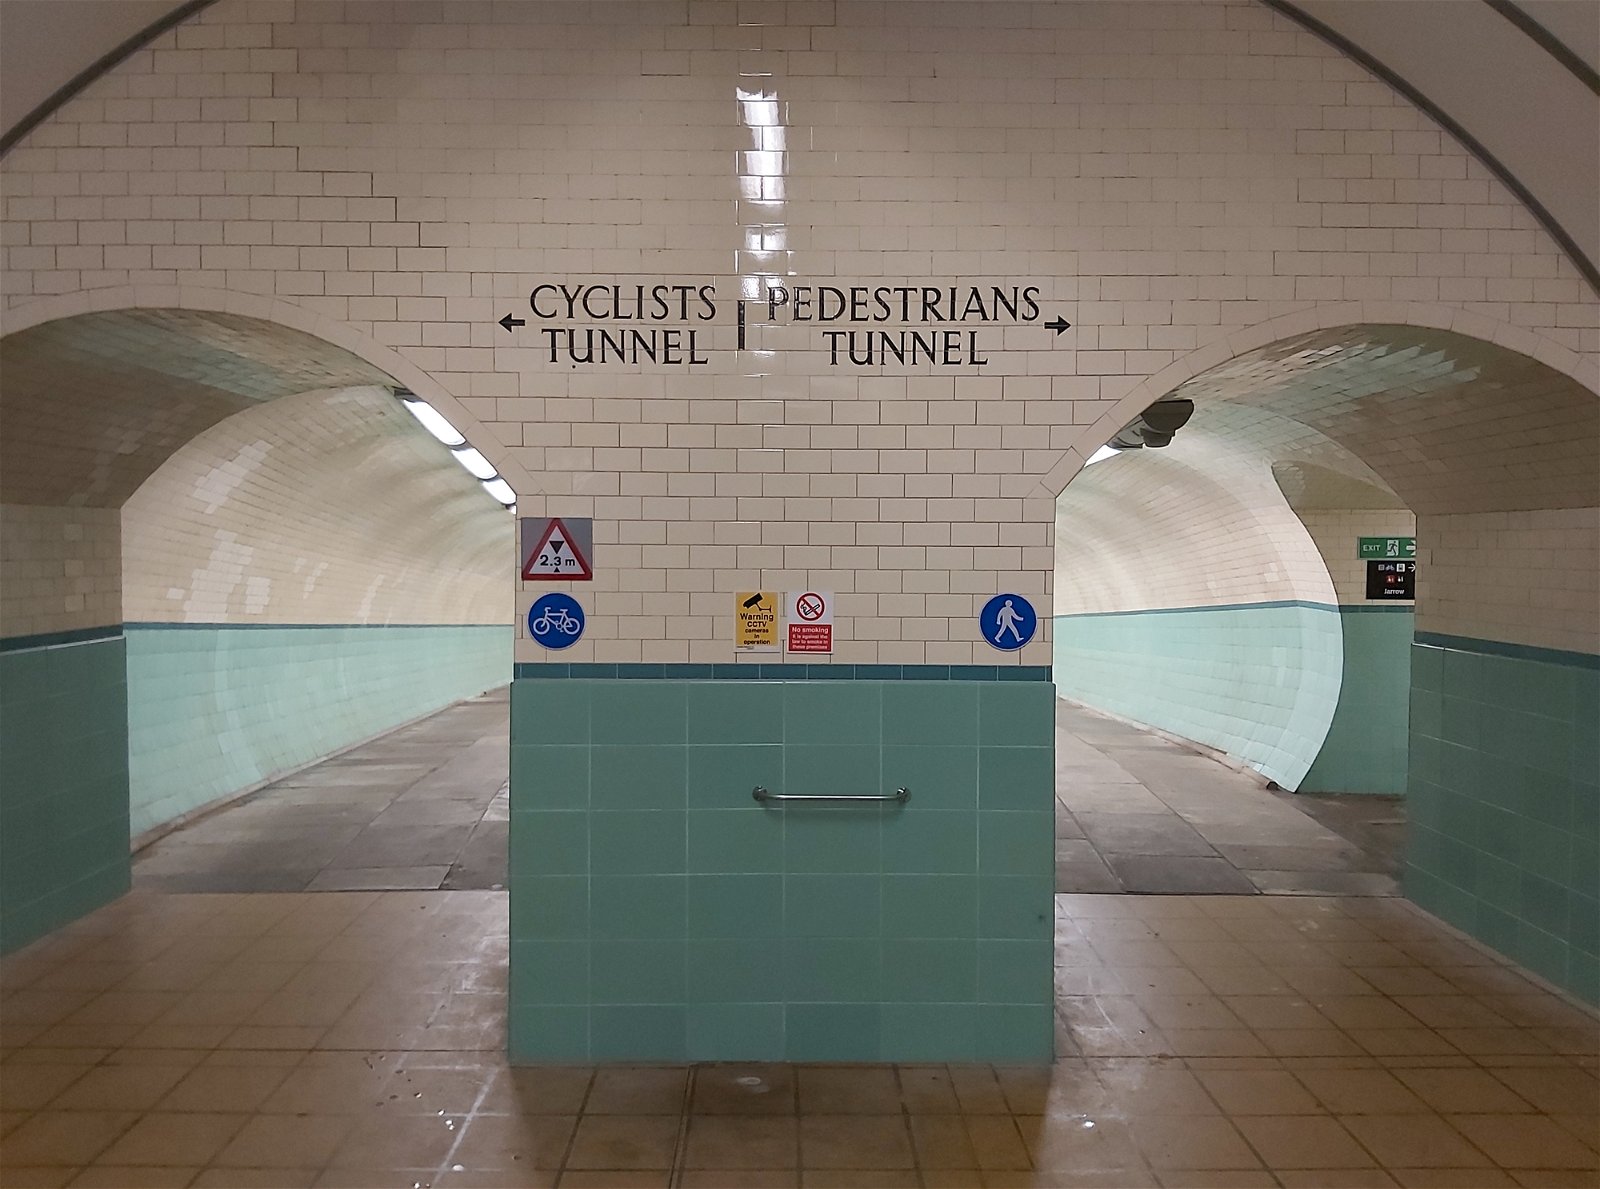 Tyne Cyclist and Pedestrian Tunnels